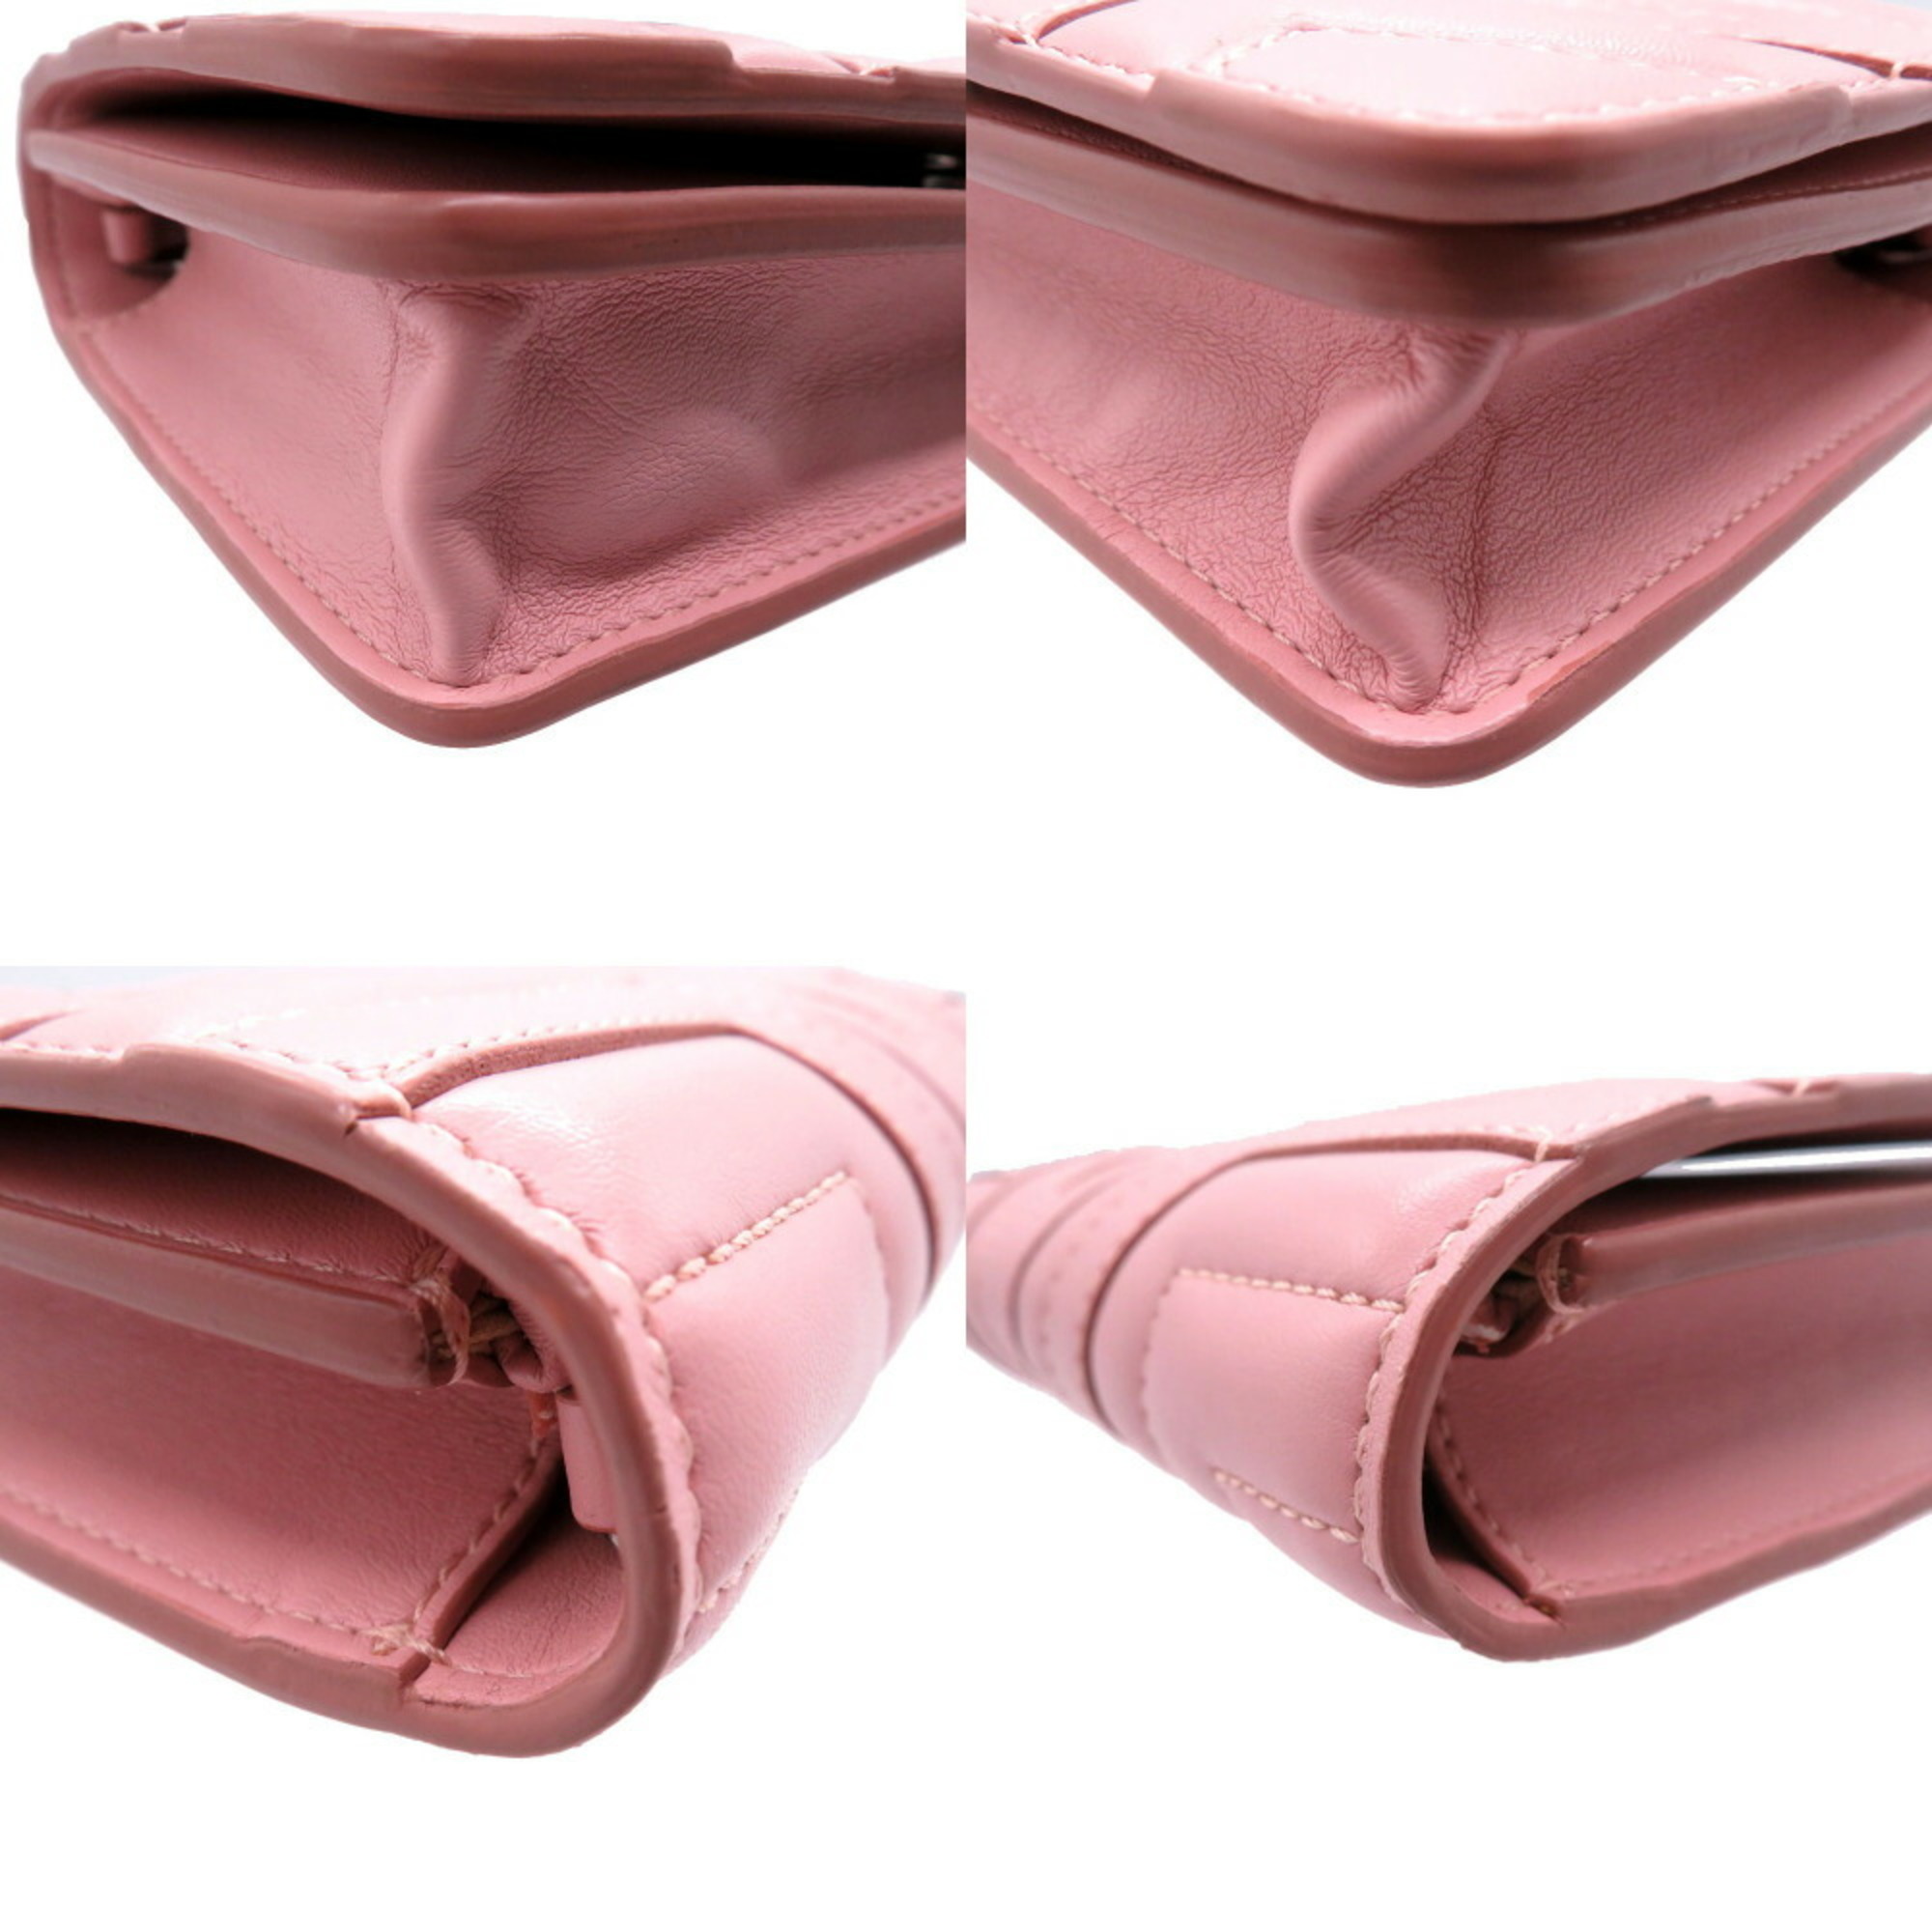 Stella McCartney Star Shoulder Bag Synthetic Leather Pink 0097Stella